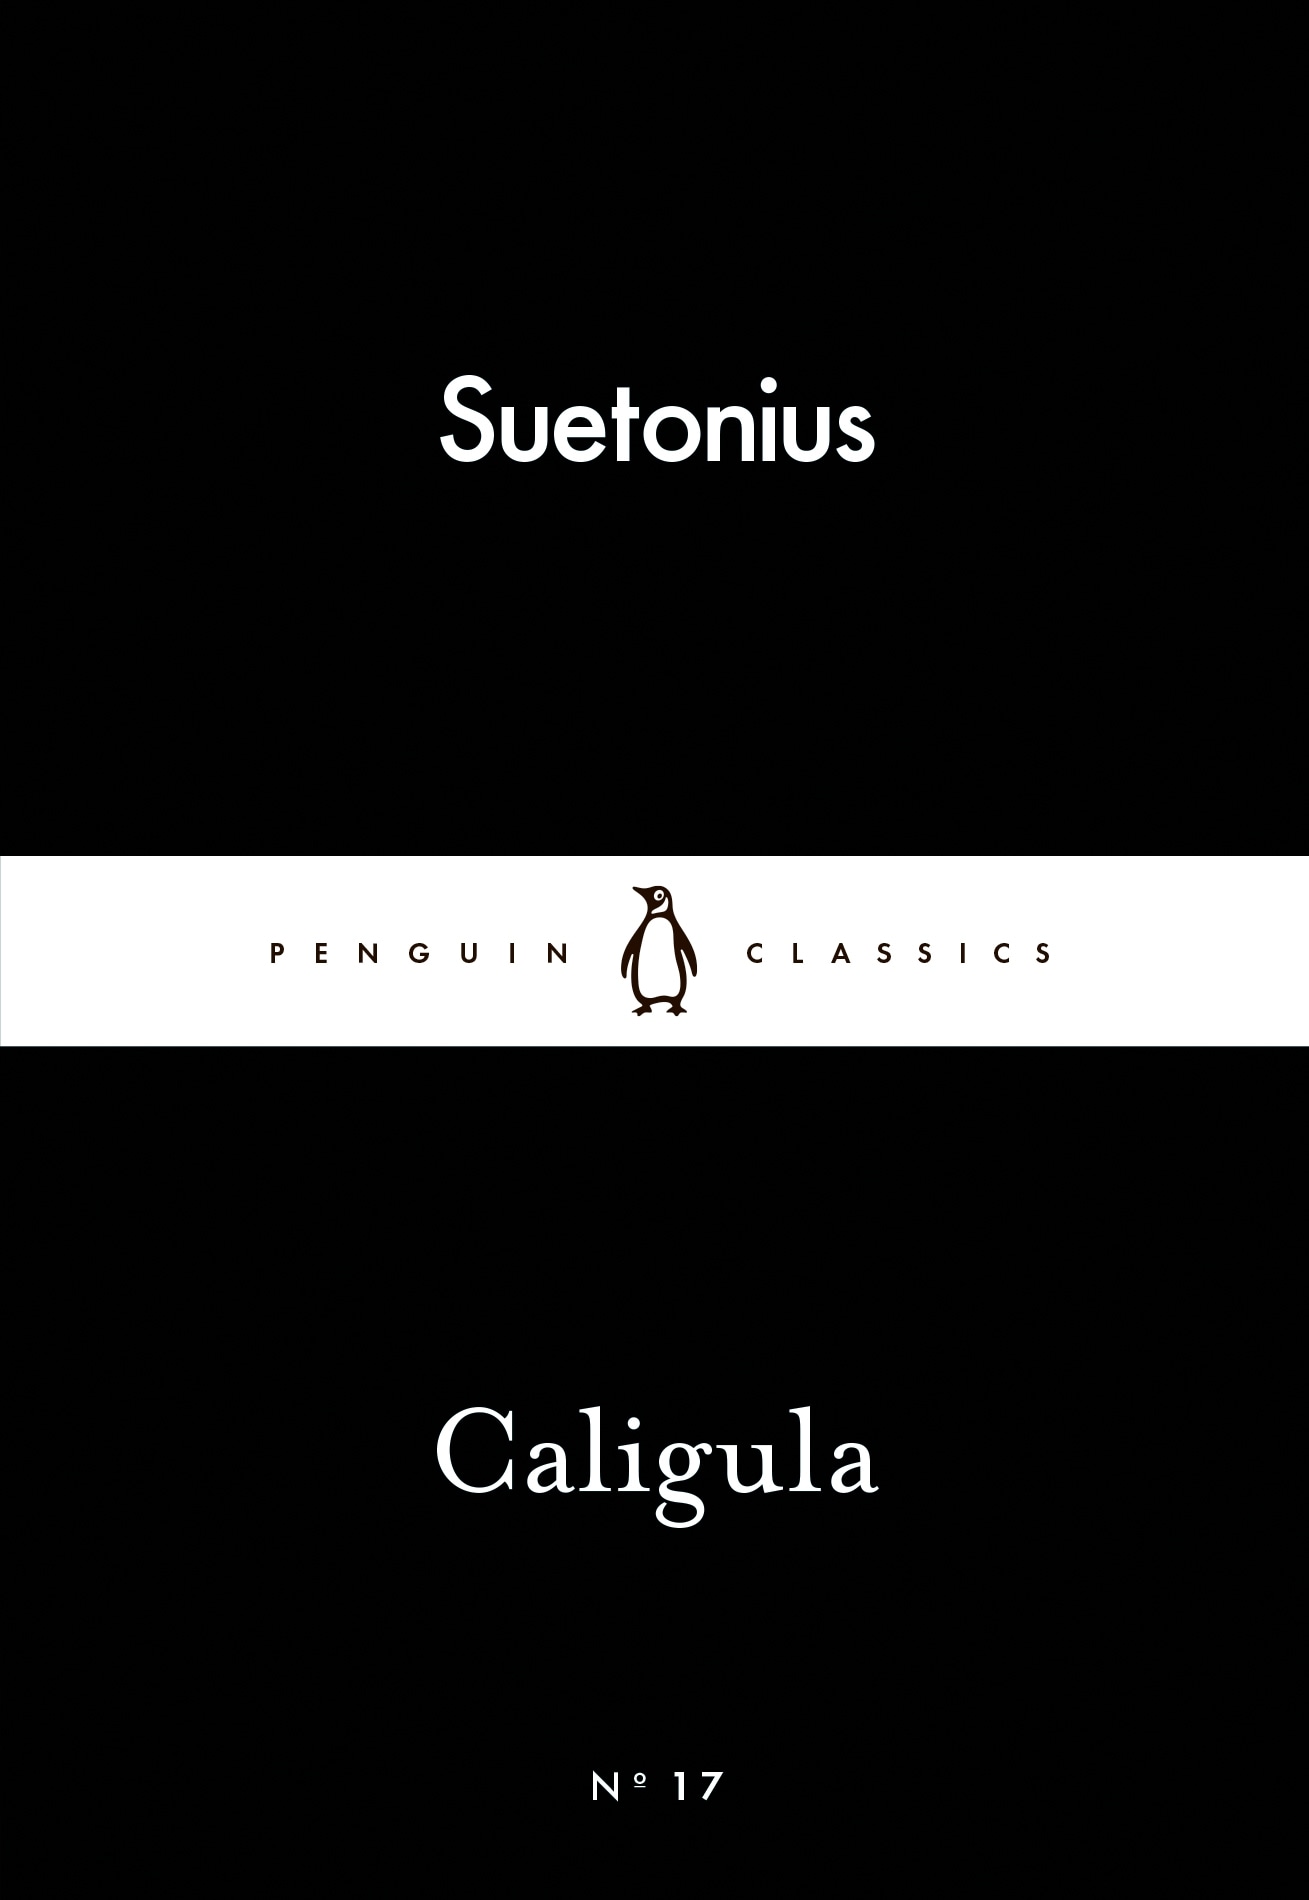 Book “Caligula” by Suetonius — February 26, 2015